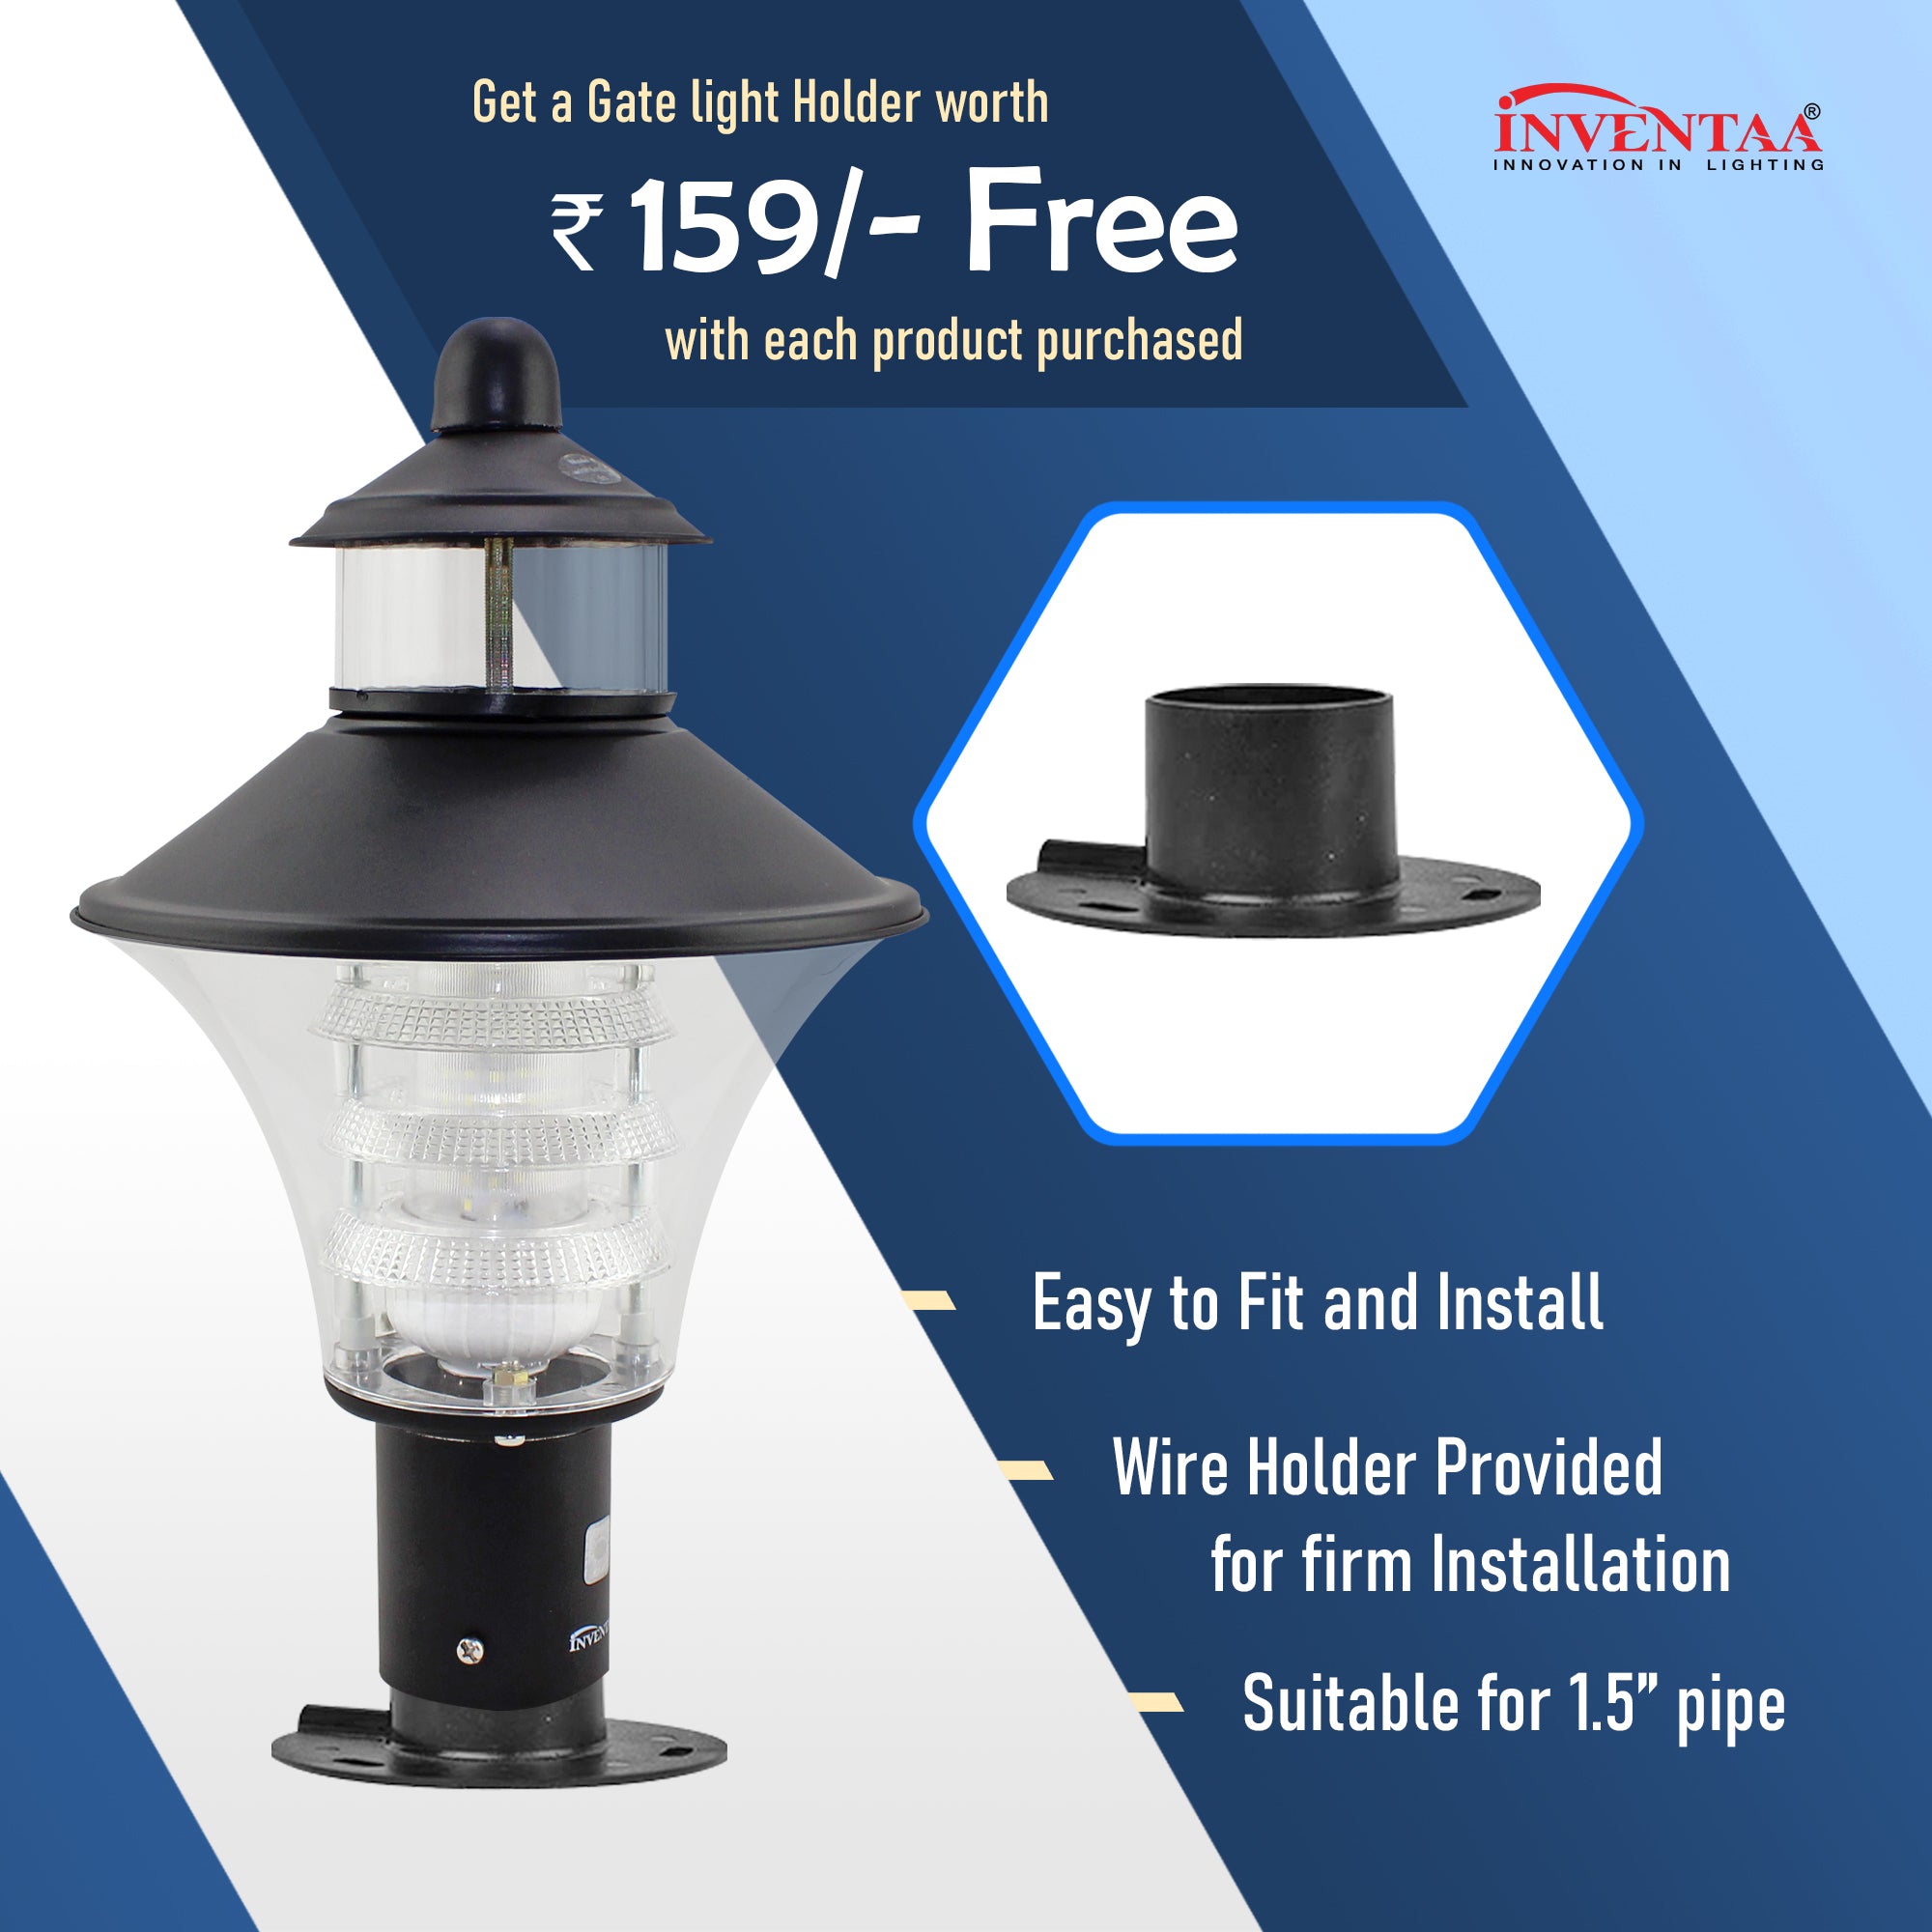 Free LED Gate Light Holder For Optic Fabula LH | Best LED Gate Light Model Online at affordable price Online  #color_matt black clear